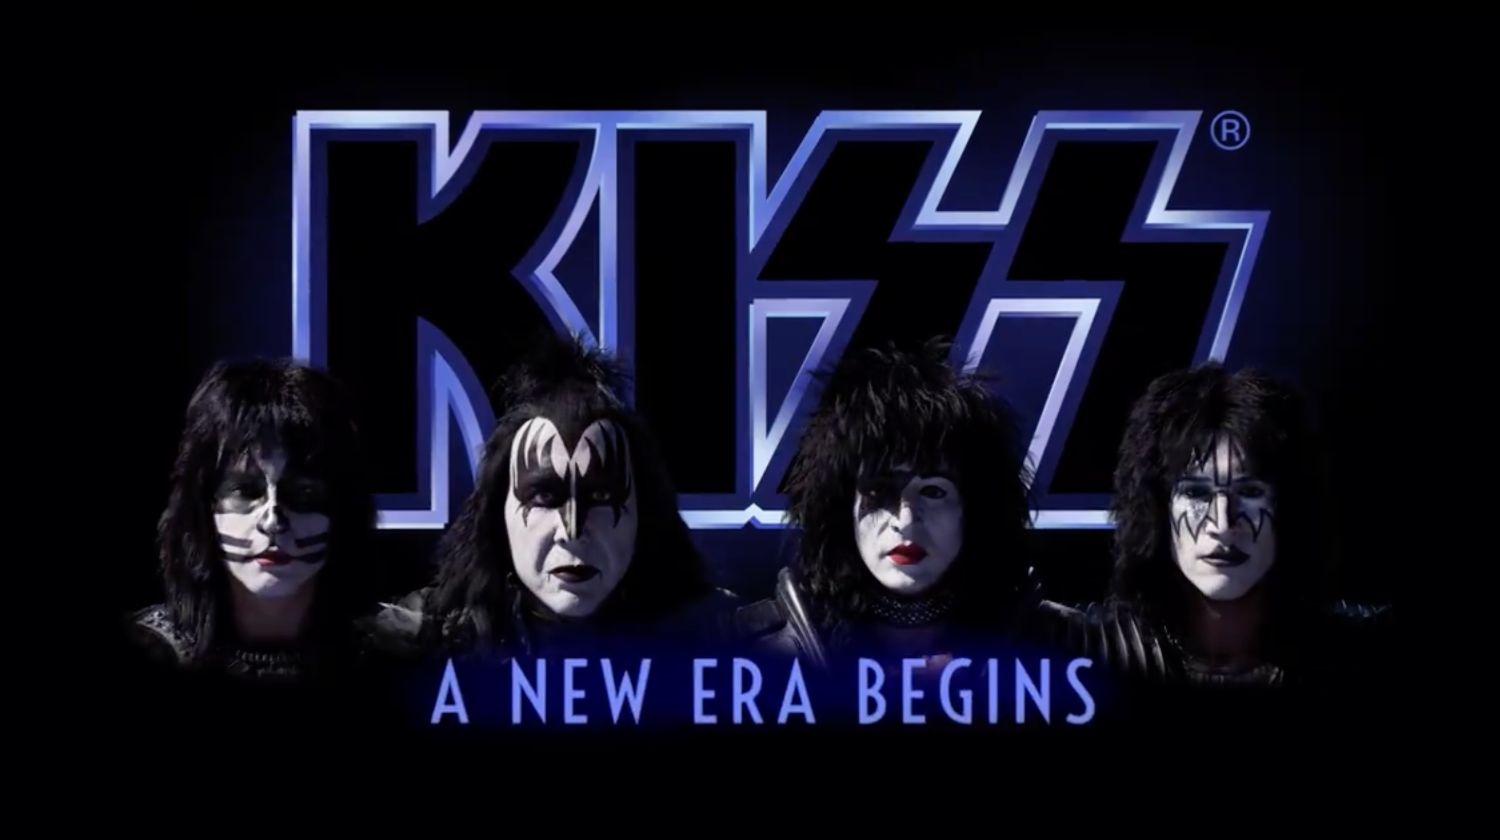 Легендарная группа Kiss будет давать концерты вечно благодаря цифровым аватарам